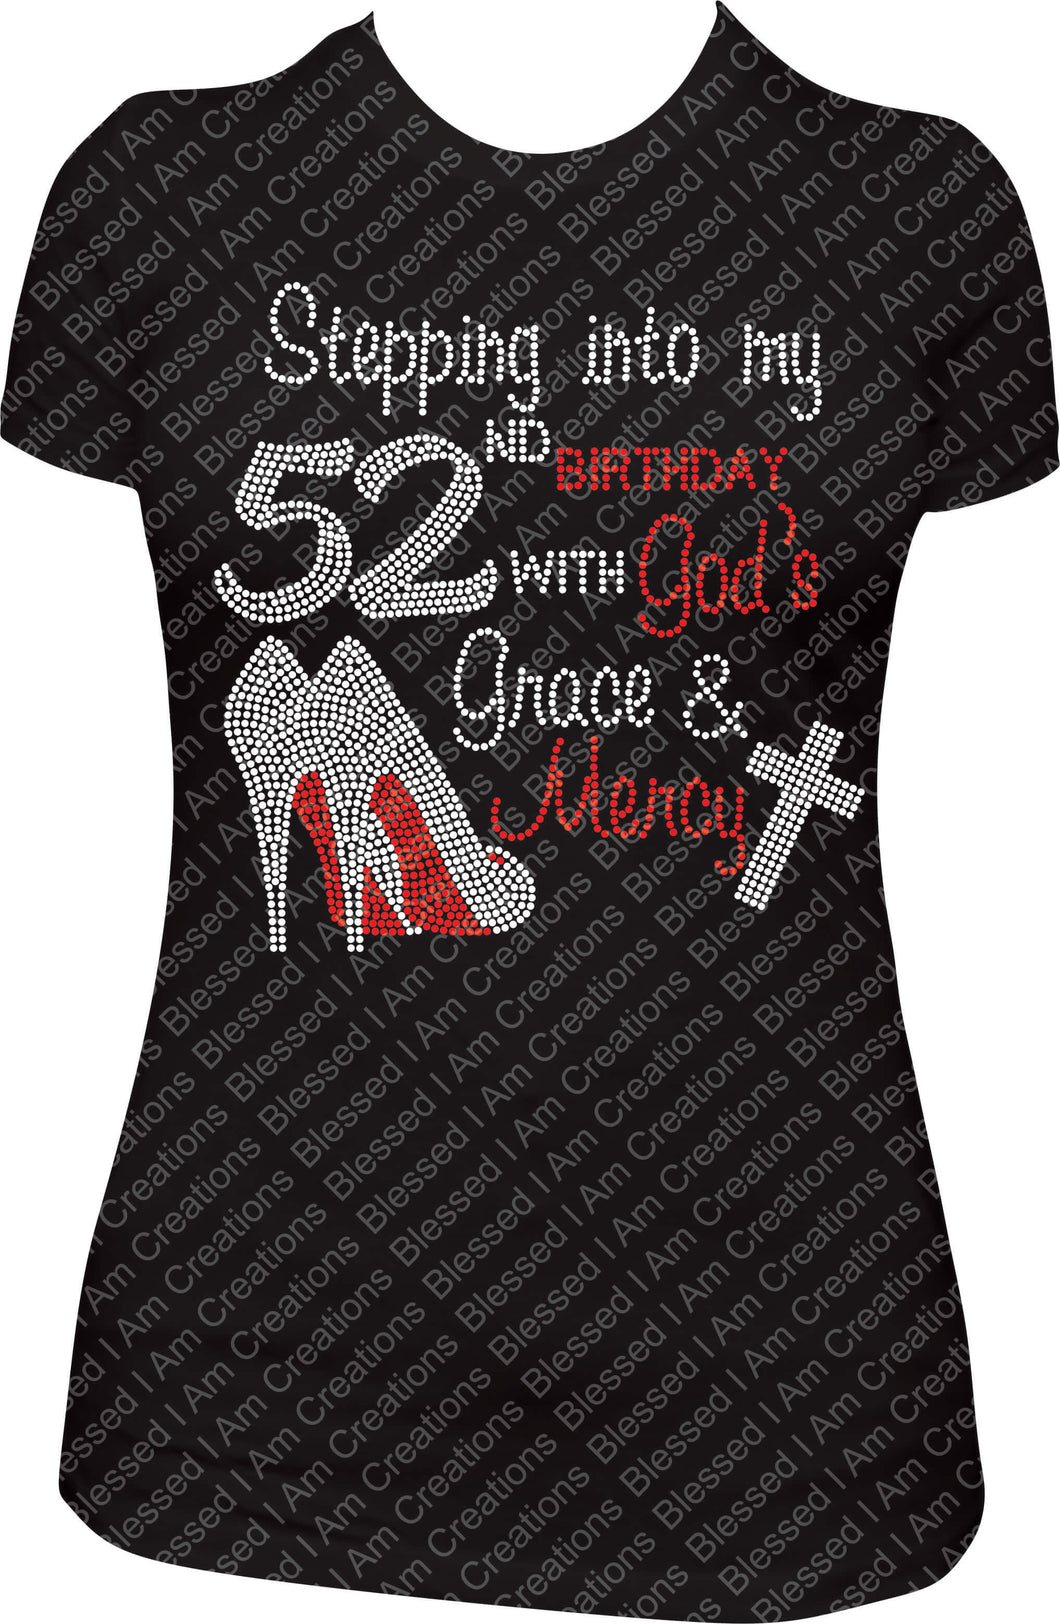 Stepping into my 52nd Birthday With God's Grace and Mercy Rhinestone Birthday Shirt